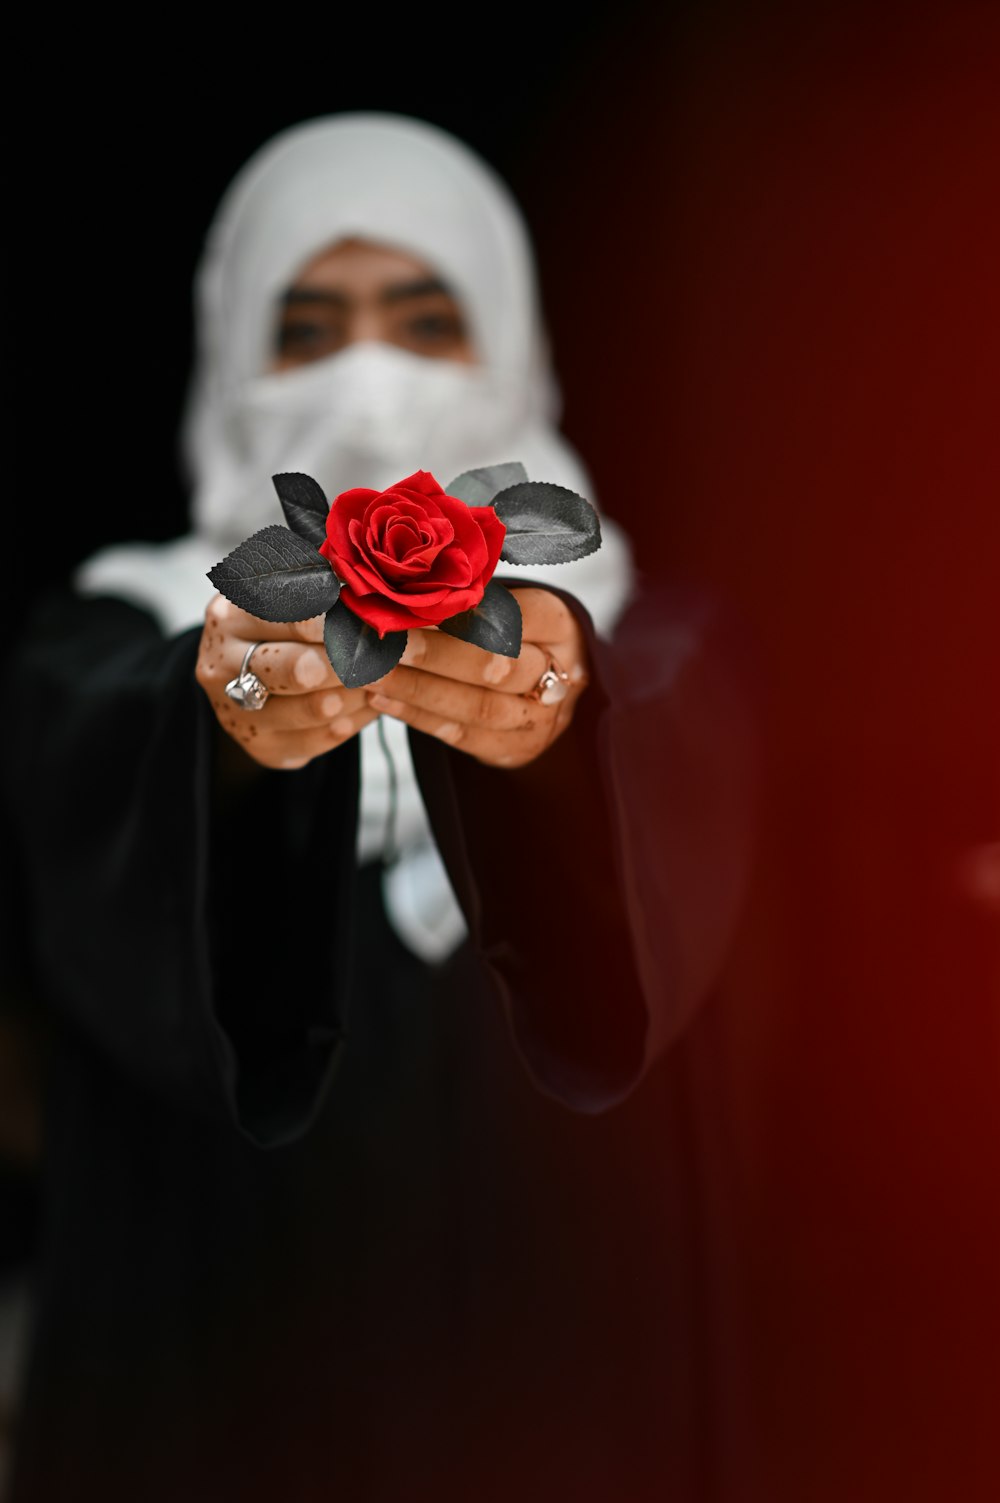 Persona sosteniendo la rosa roja frente a una mujer con hiyab negro